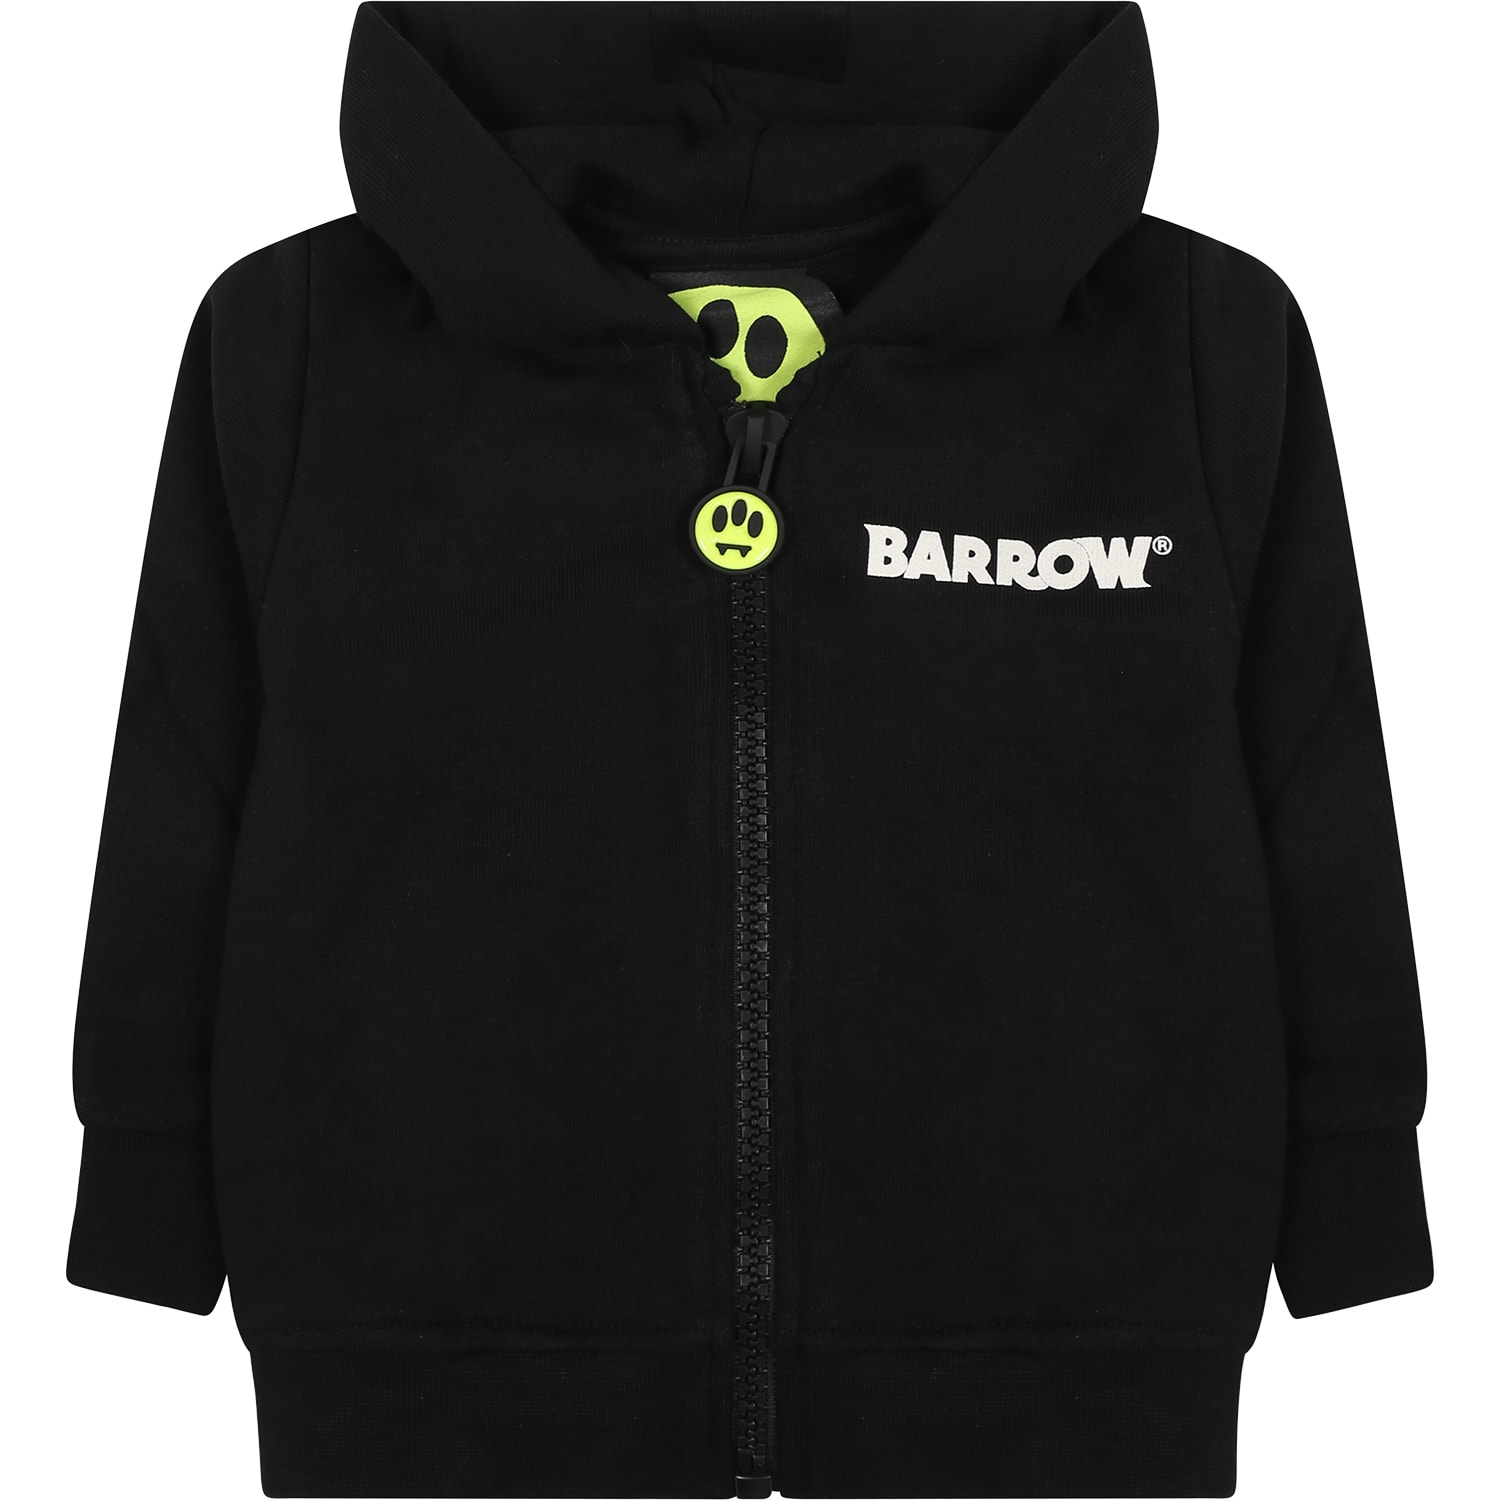 Shop Barrow Black Sweatshirt For Baby Boy With Logo